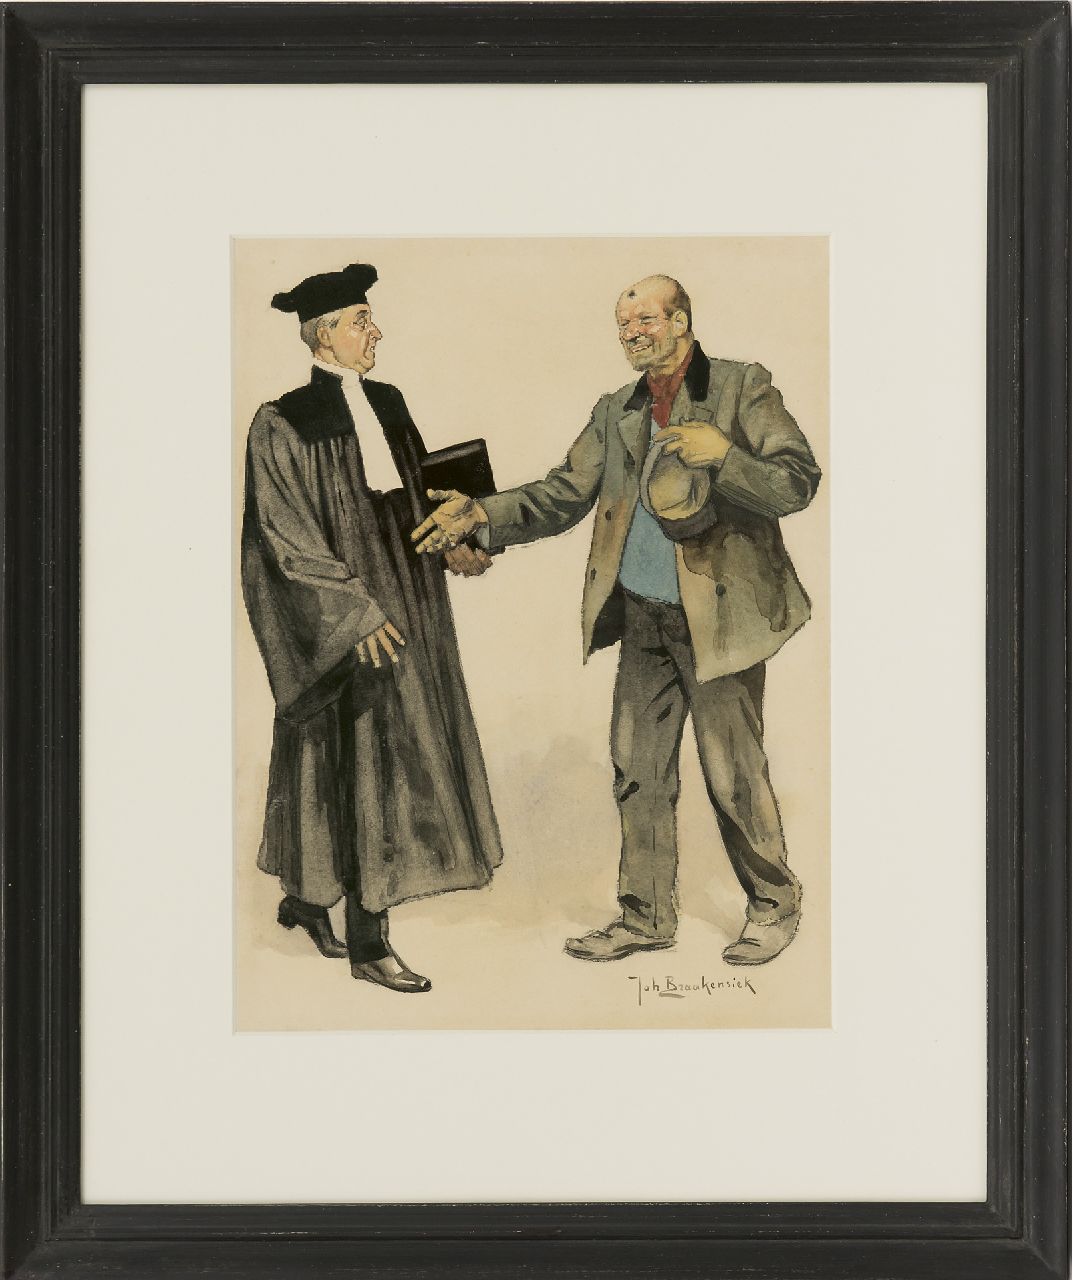 Braakensiek J.C.  | 'Johan' Coenraad Braakensiek, The lawyer and his client, charcoal and watercolour on paper 31.1 x 23.5 cm, signed l.r.